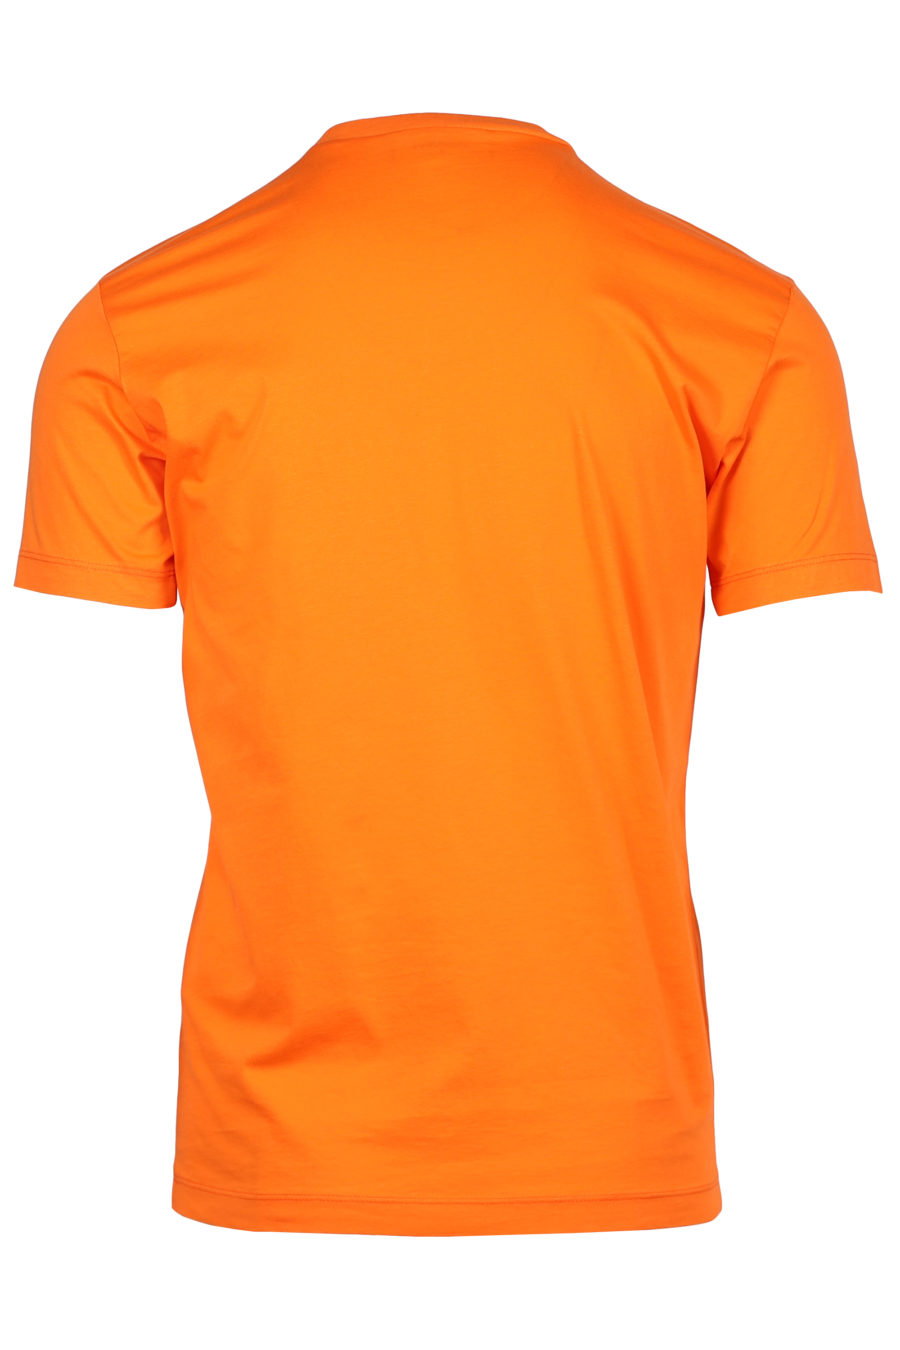 T-shirt orange avec logo vertical "Icon"" - IMG 2321